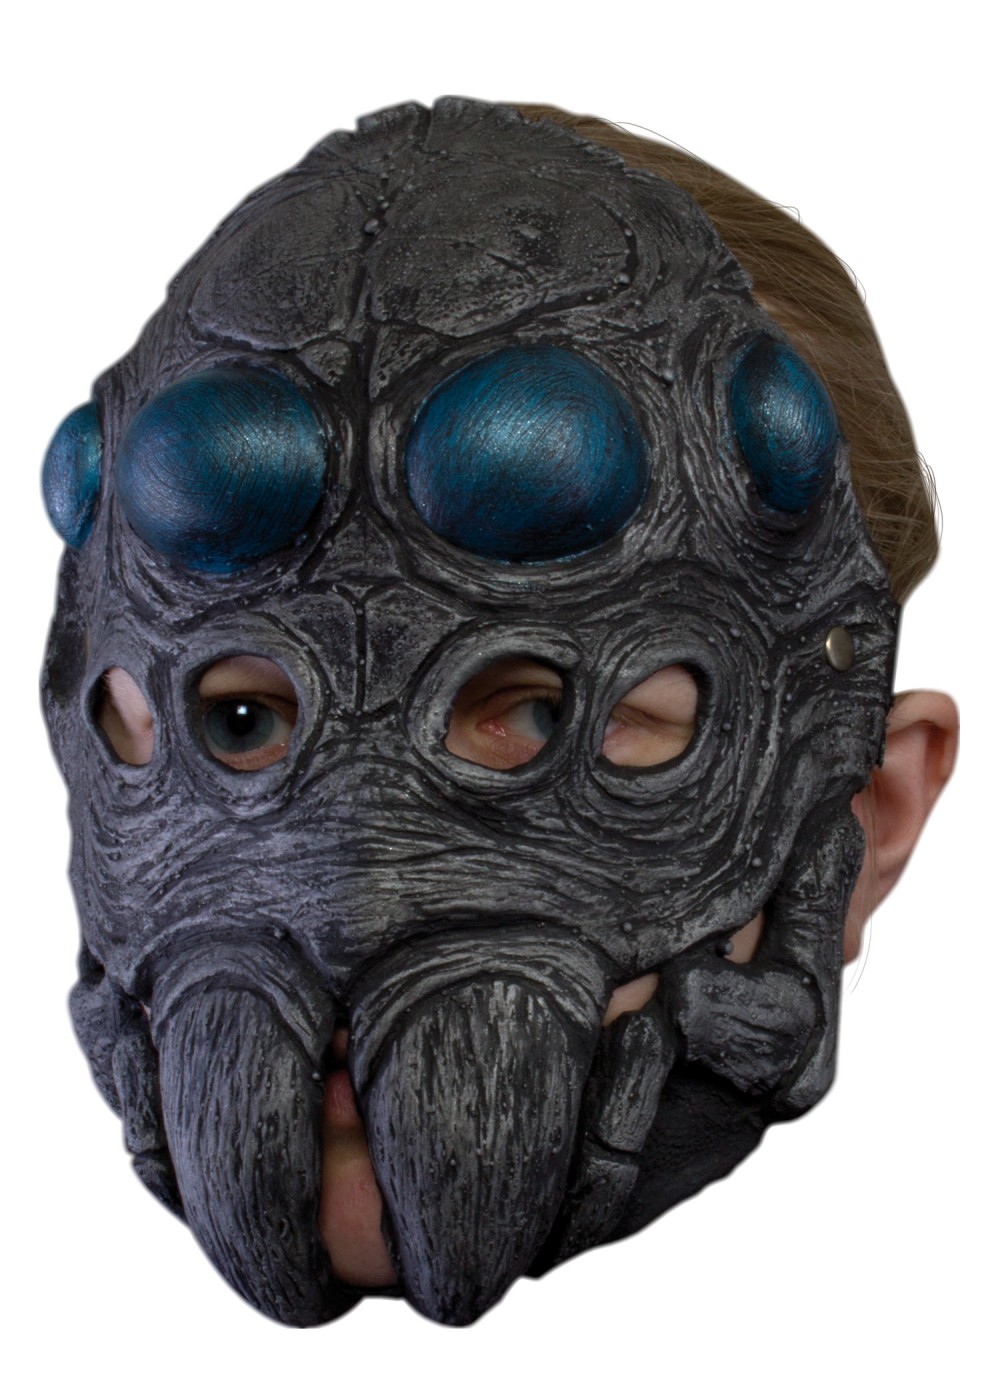 Spider Head Trophy Mask, latexmask | Nidingbane